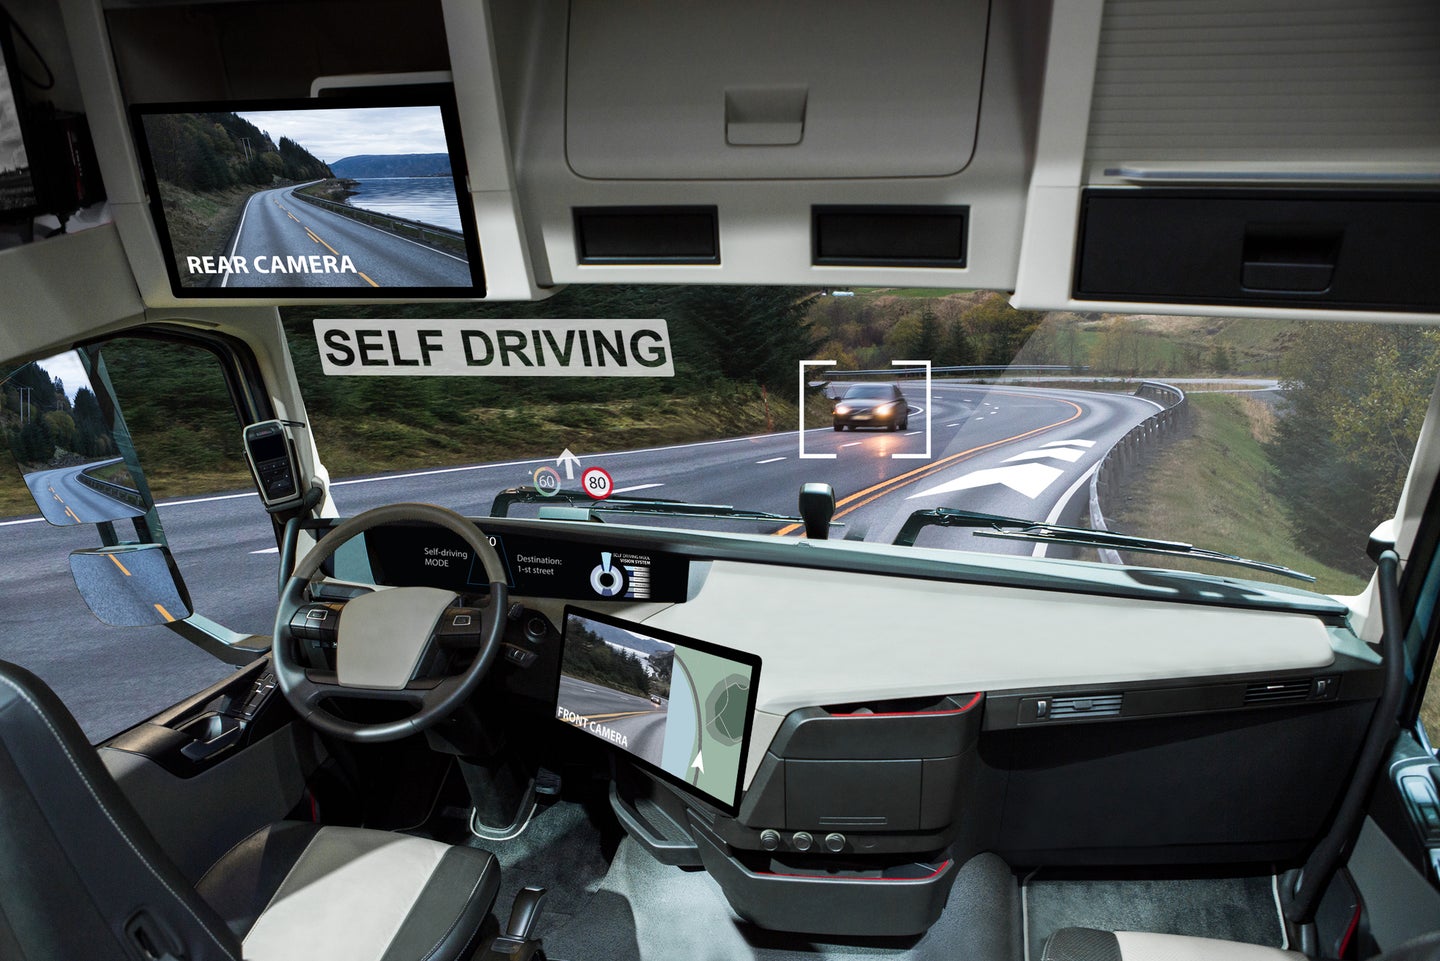 Self Driving photo